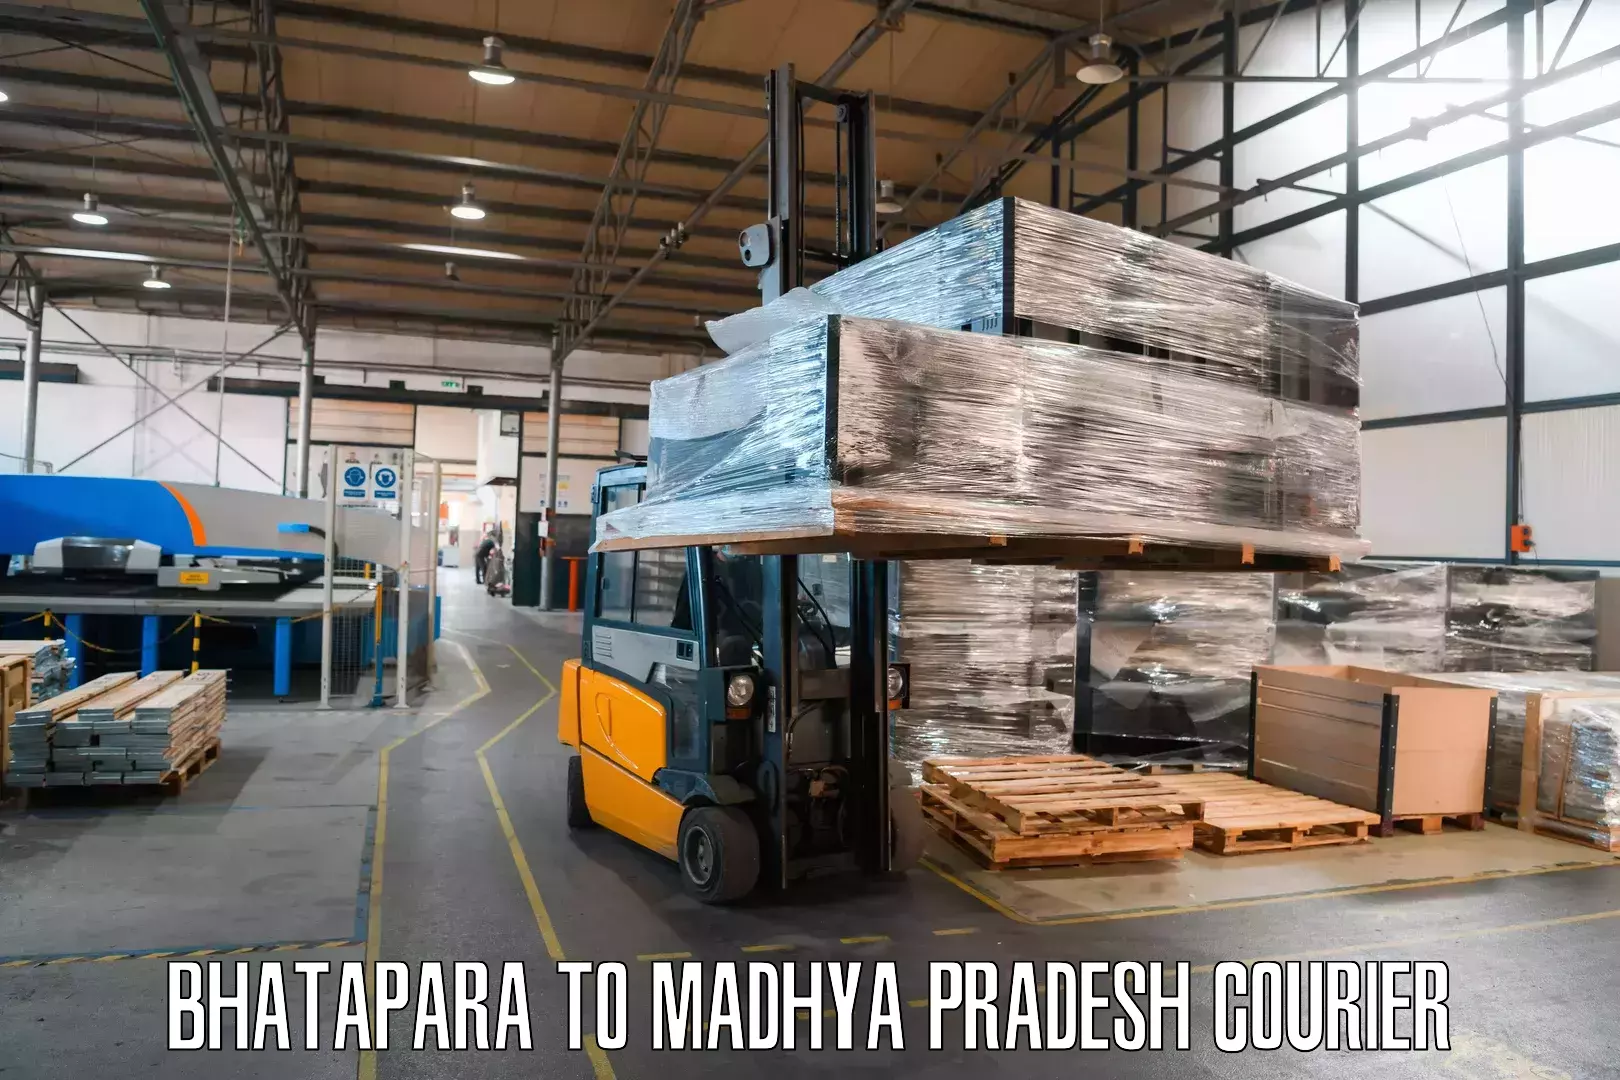 Express delivery solutions in Bhatapara to Ashoknagar